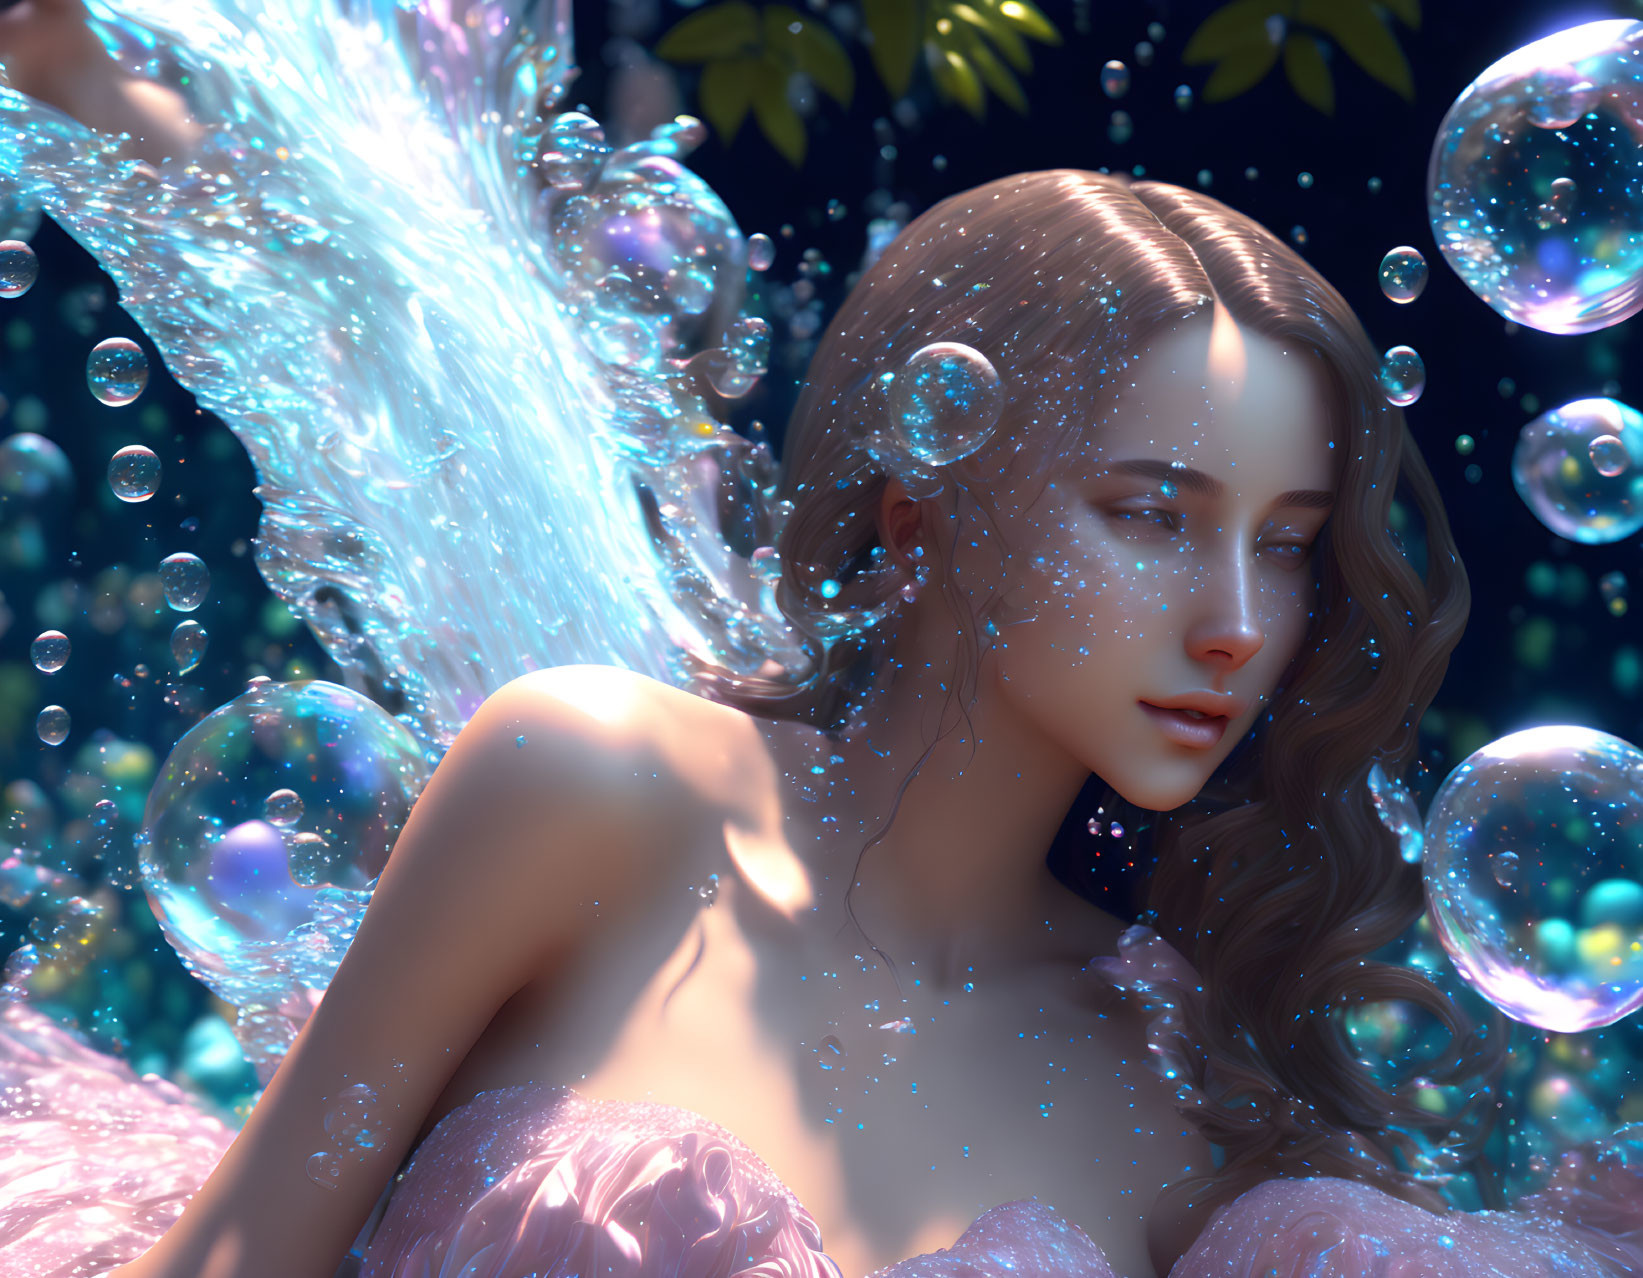 Fantasy woman digital artwork with radiant skin in water splash setting